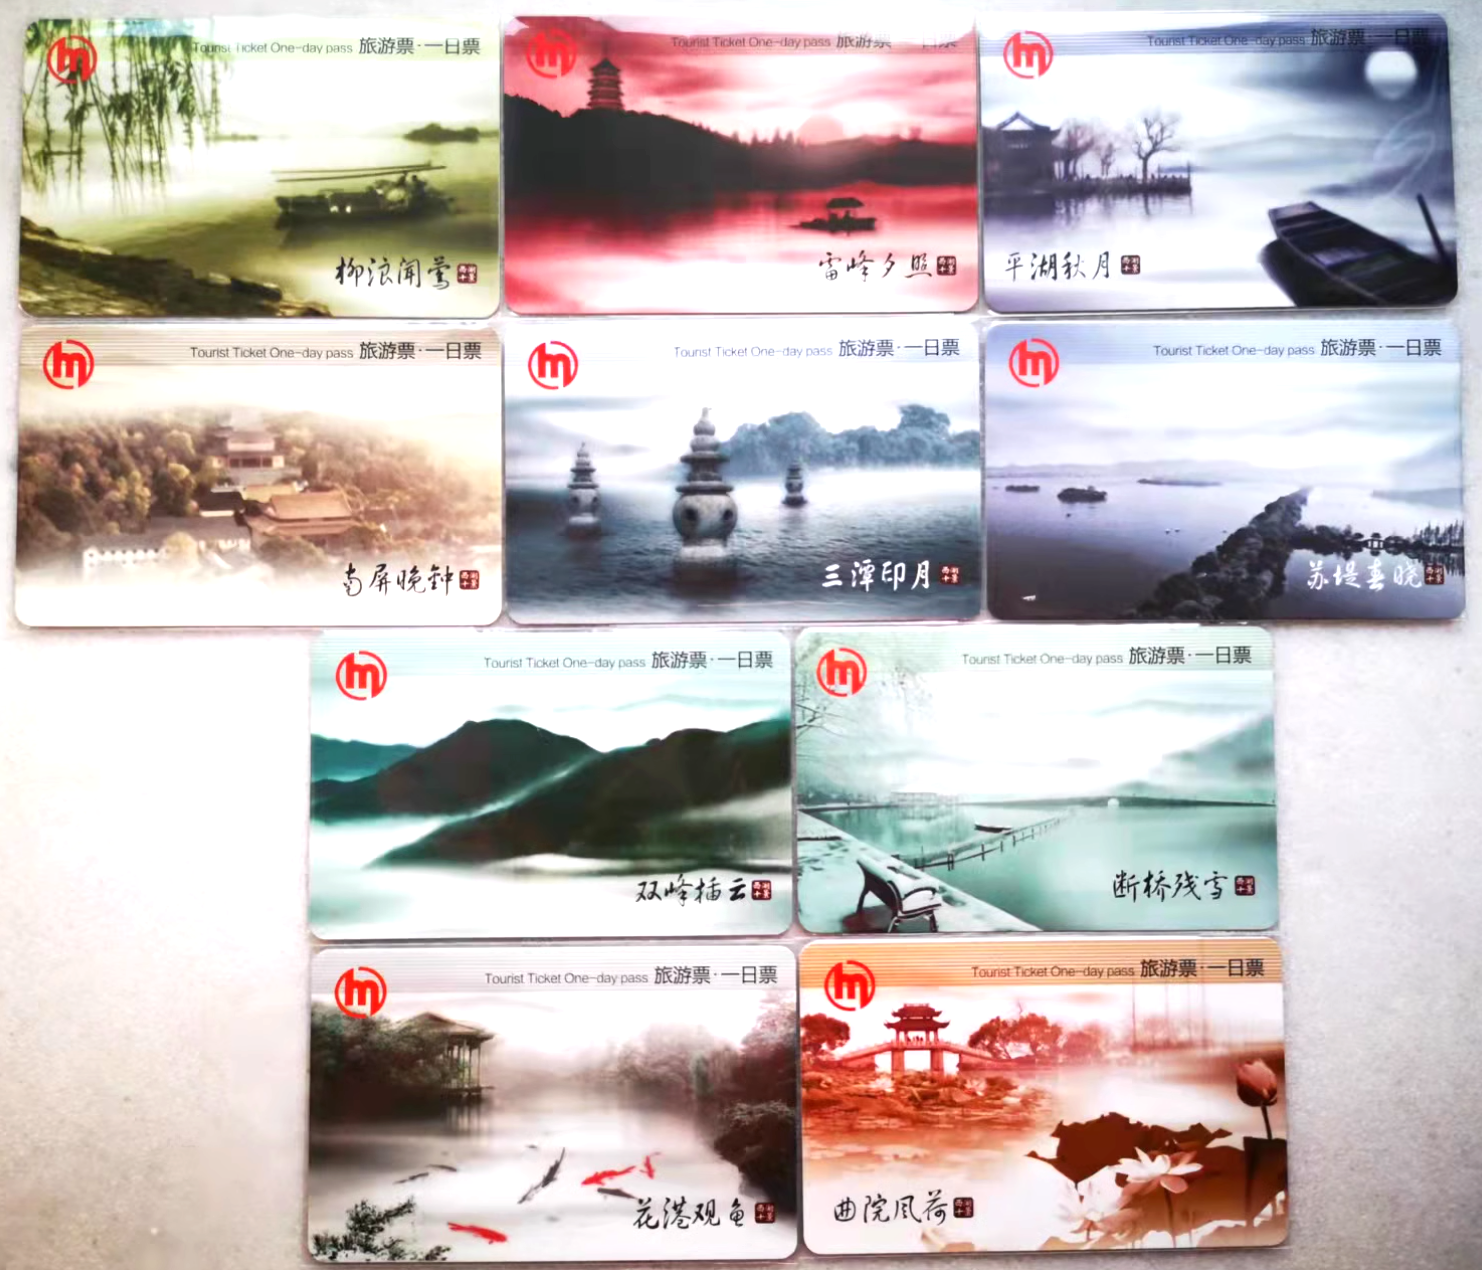 T5219, China Hangzhou City Metro Cards (Subway), Set of 10 pcs, One Day